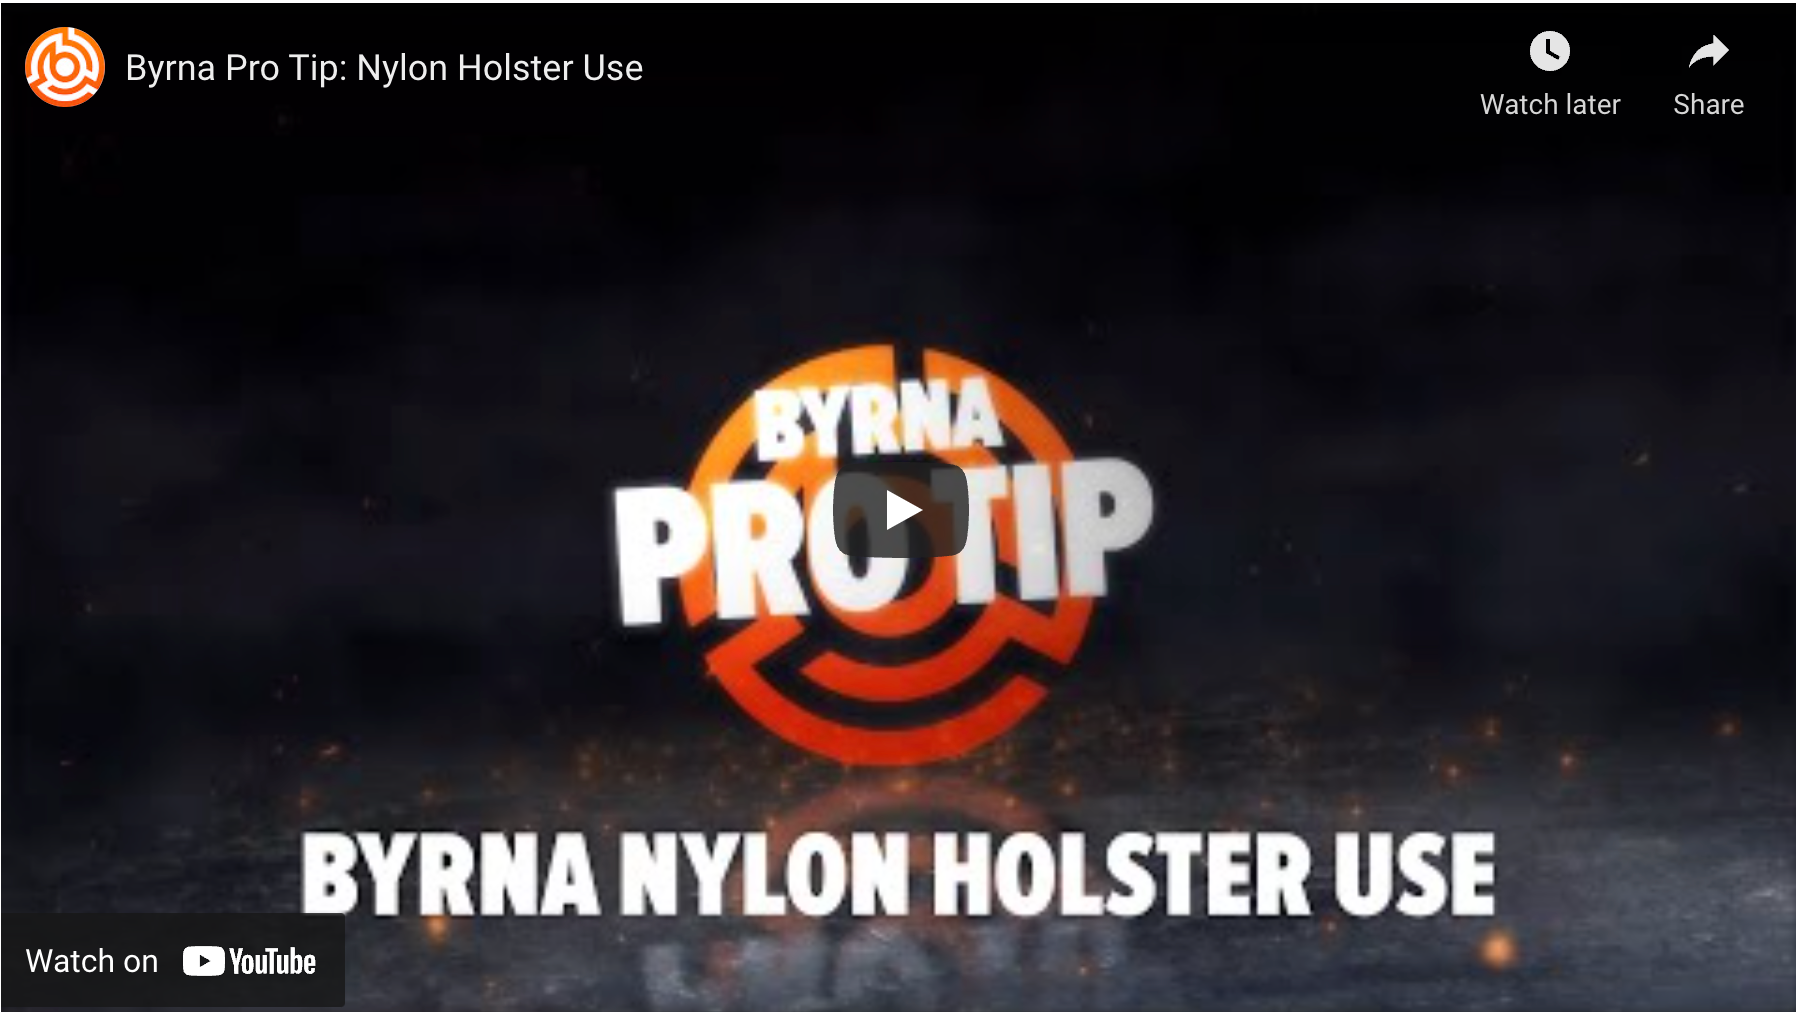 Byrna Pro Tip: Nylon Holster Use